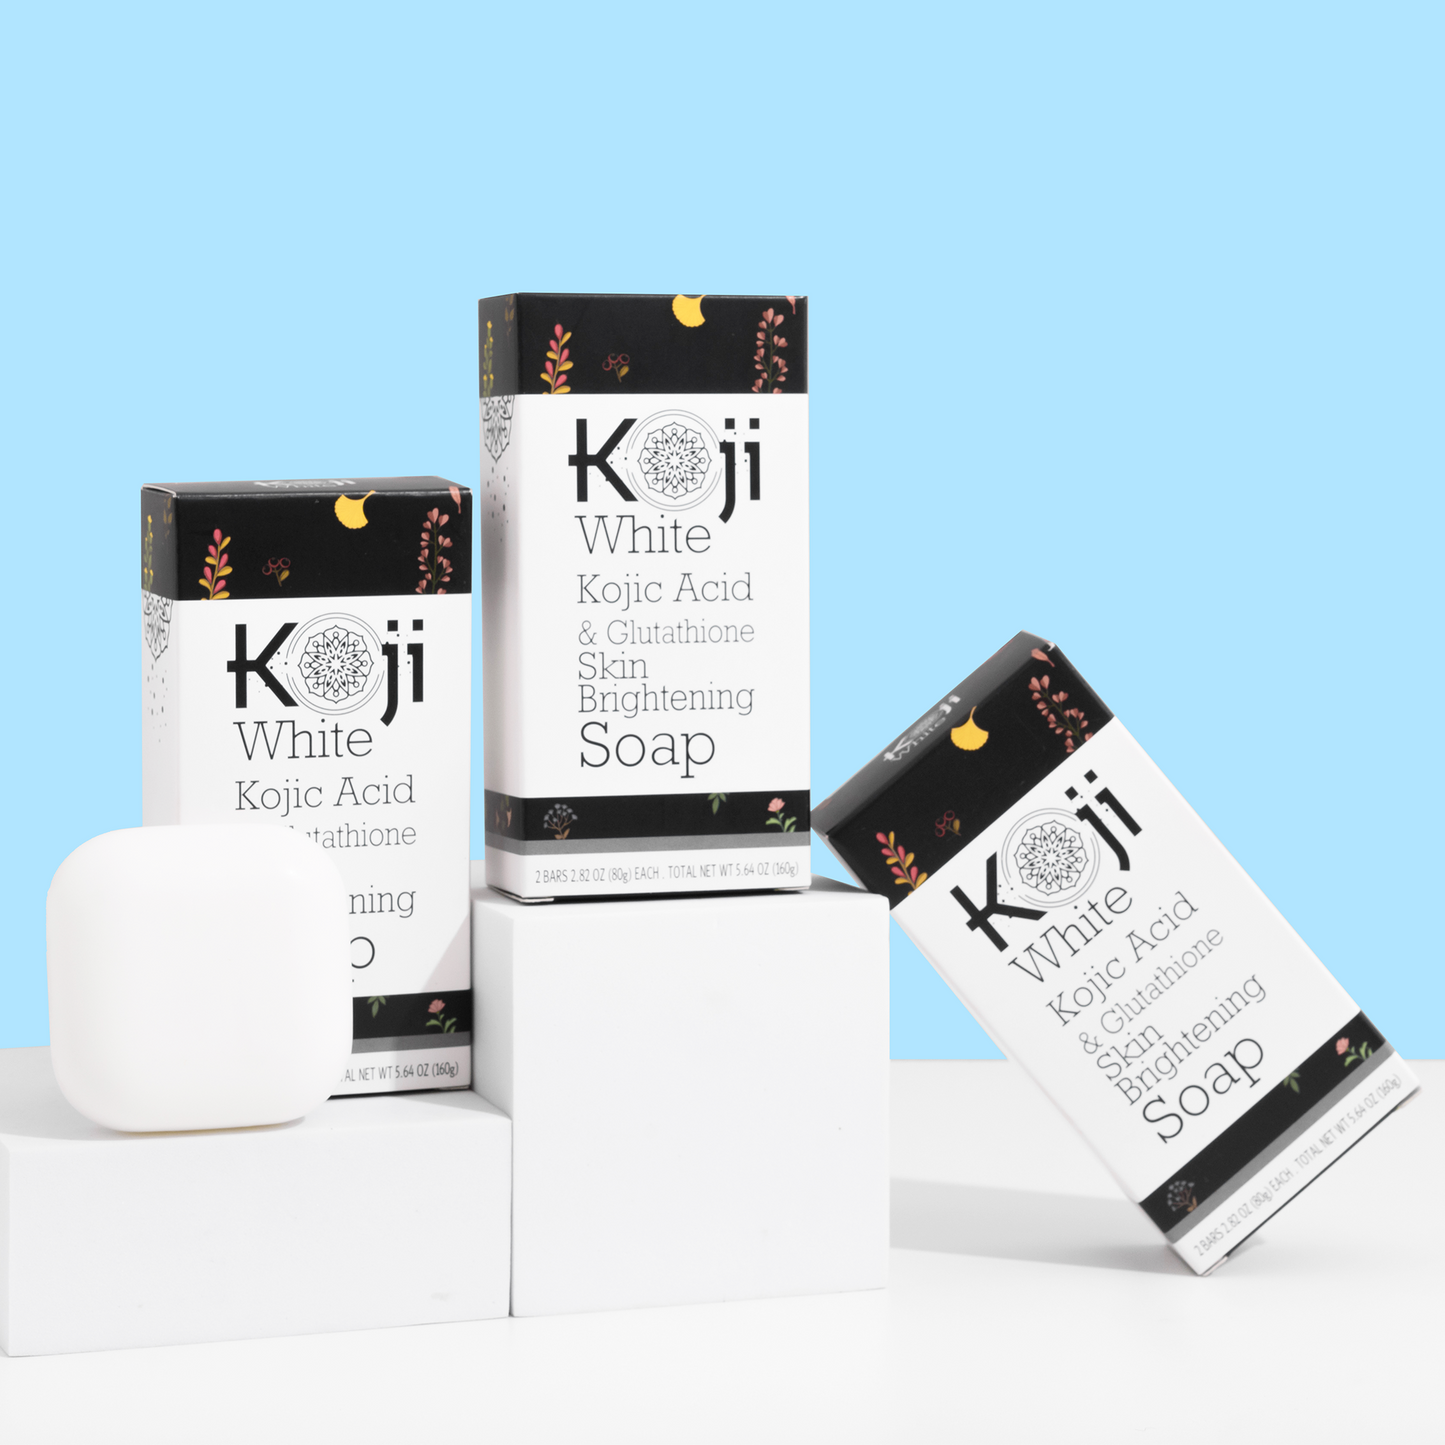 Kojic Acid & Glutathione Skin Brightening Soap (2 Bars)